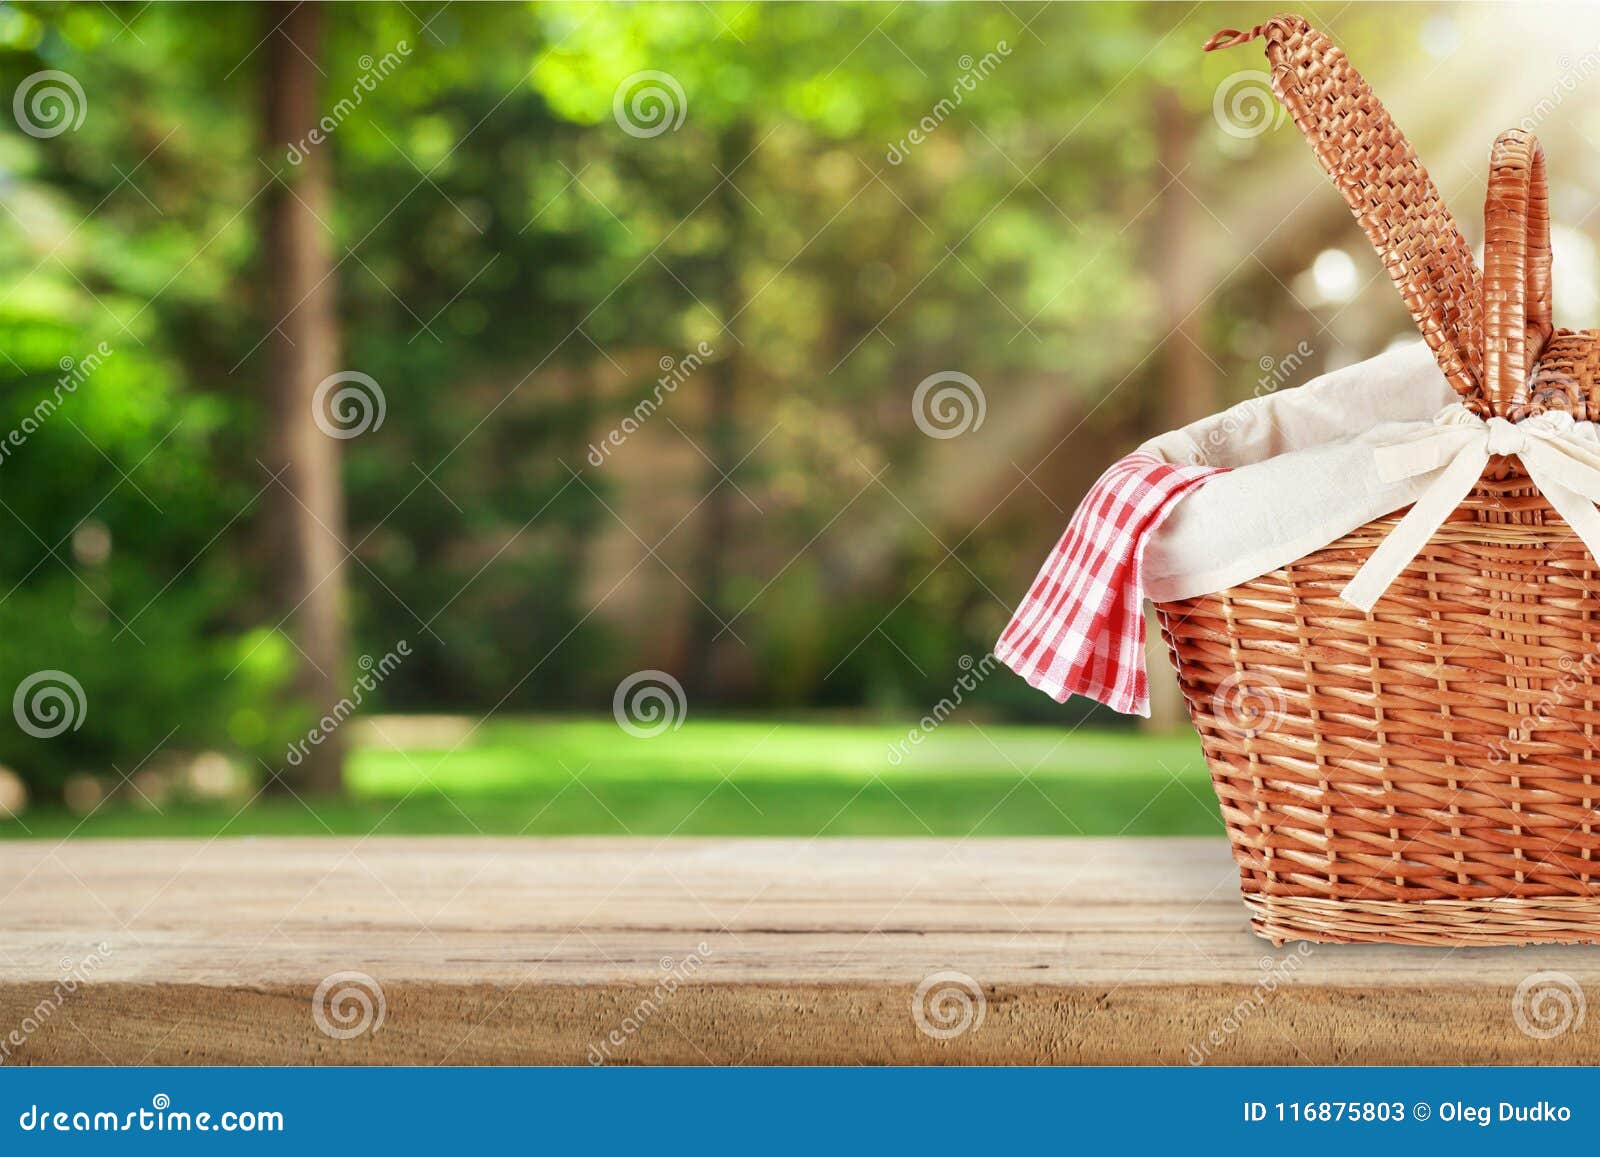 Picnic Basket With Napkin On Nature Background Stock Image Image Of